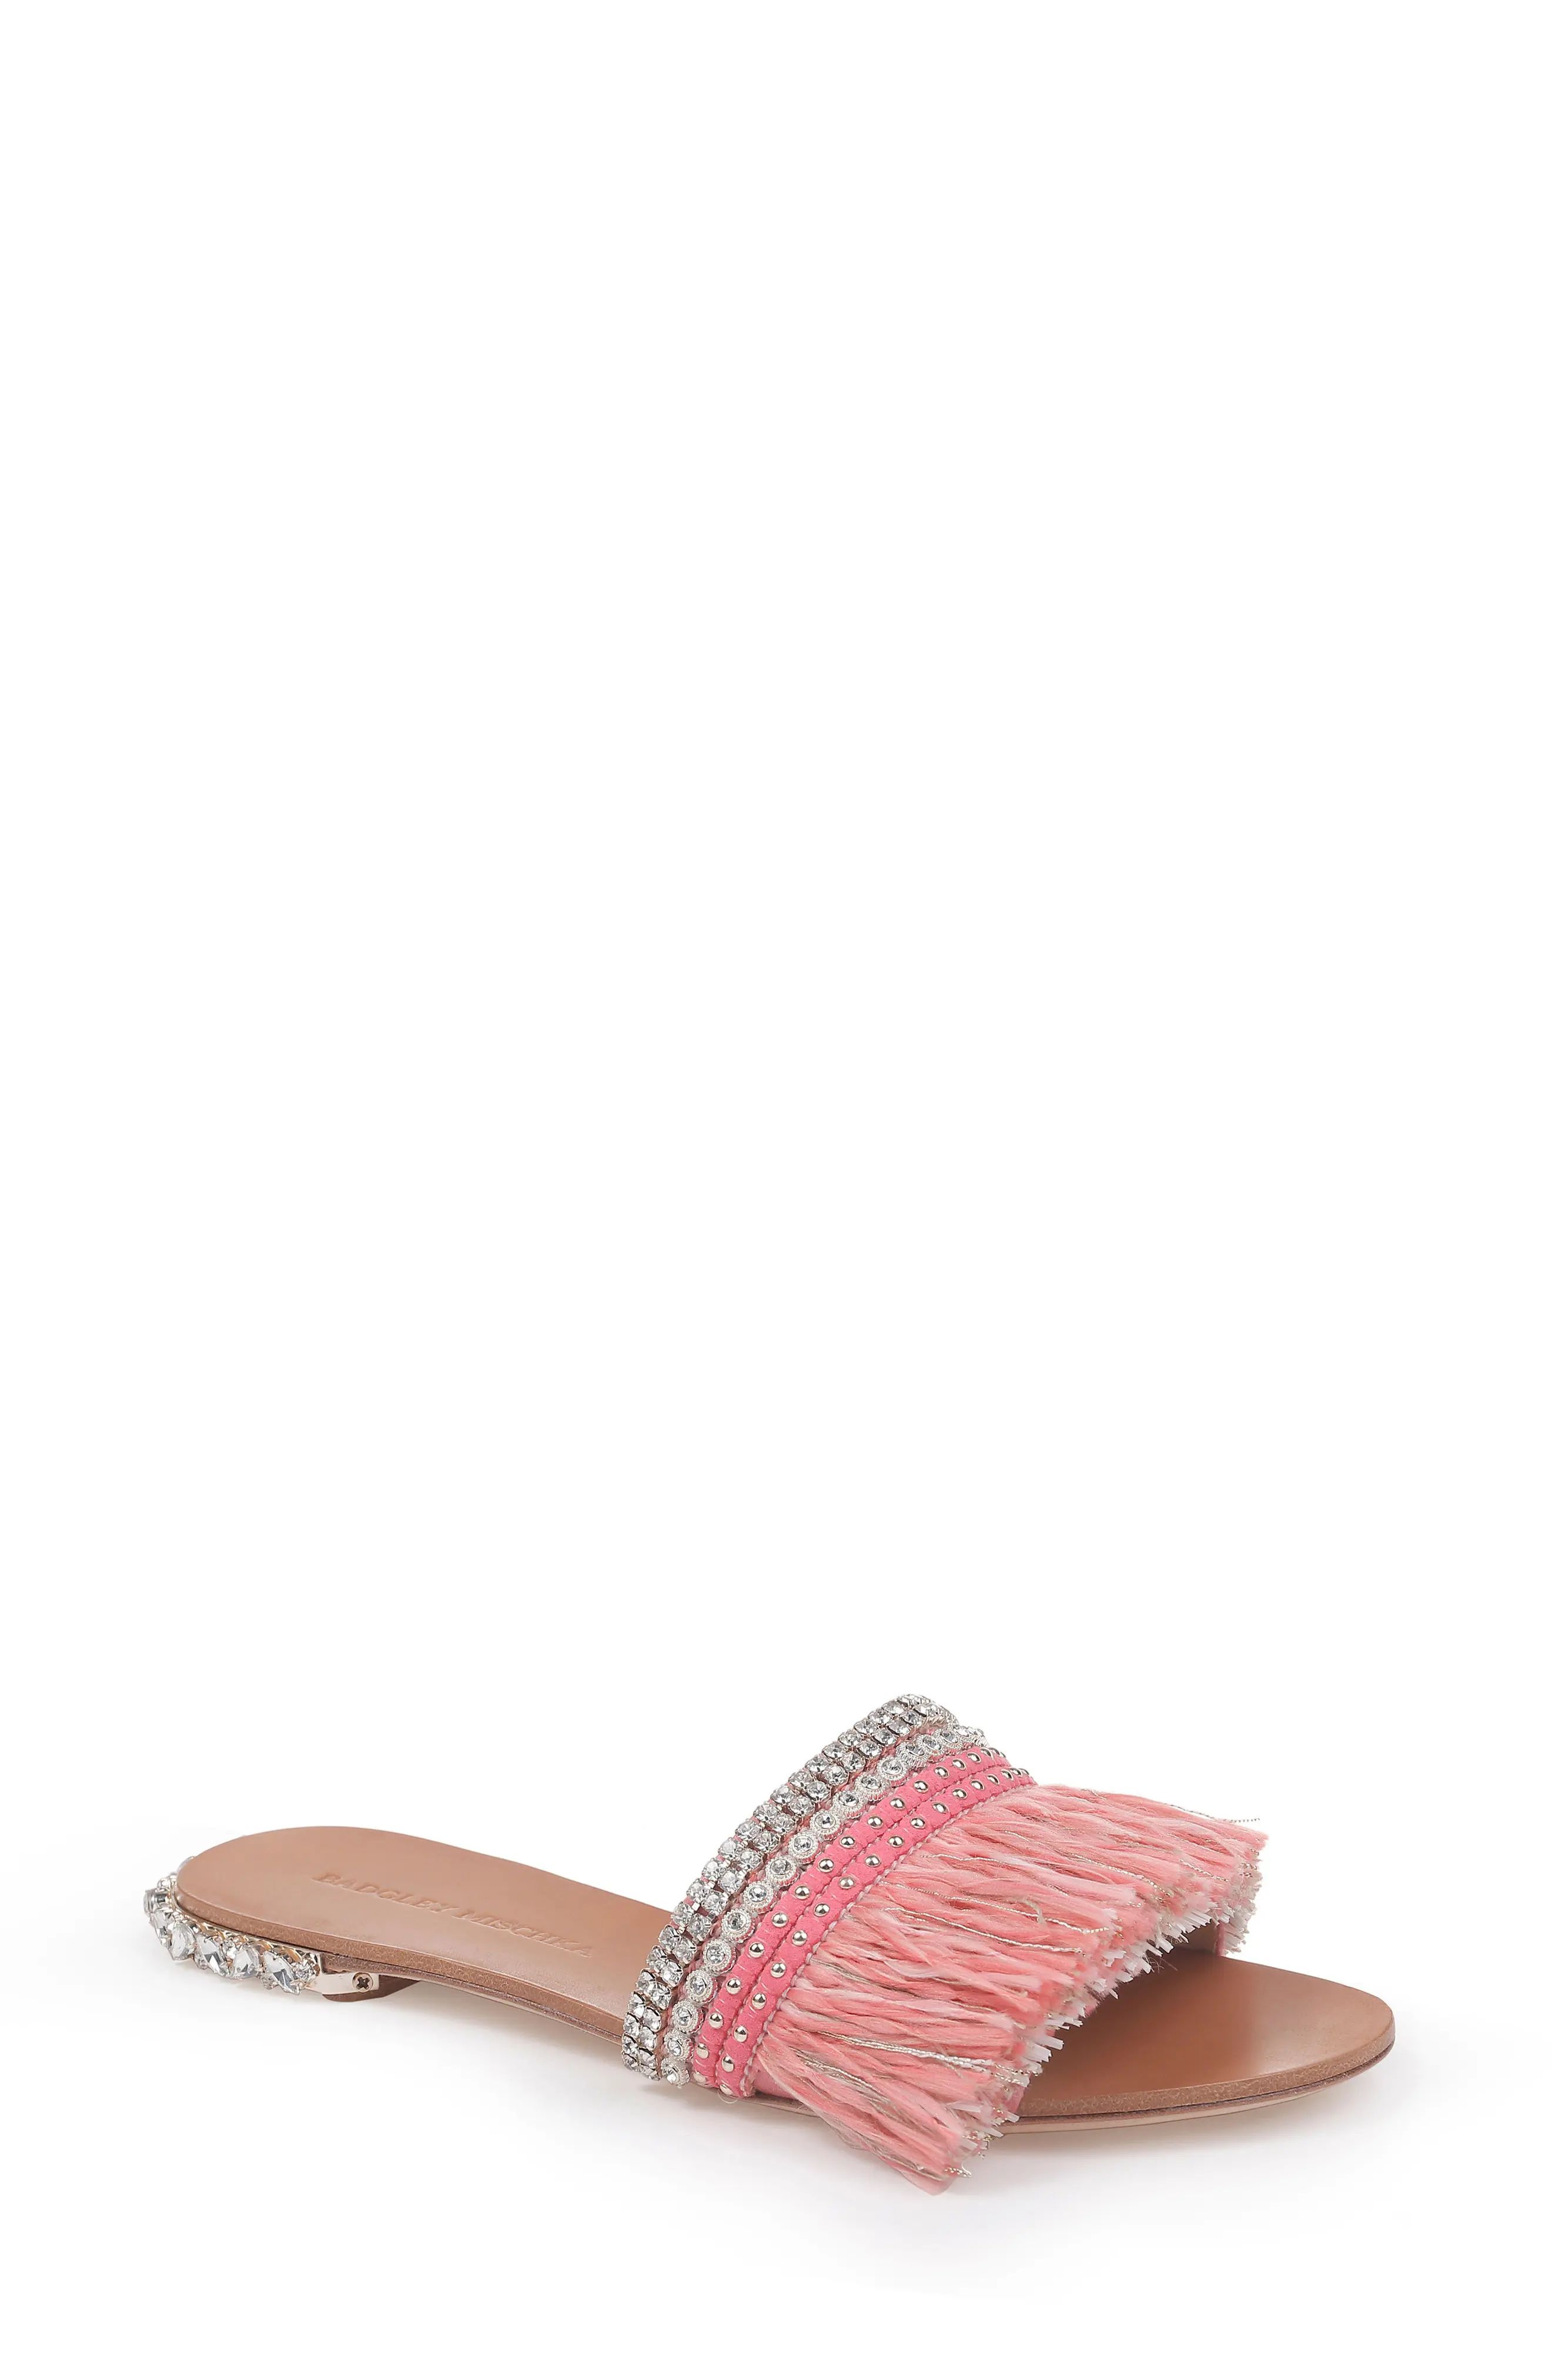 Women's Badgley Mischka Sharlene Sandal, Size 5.5 M - Pink | Nordstrom